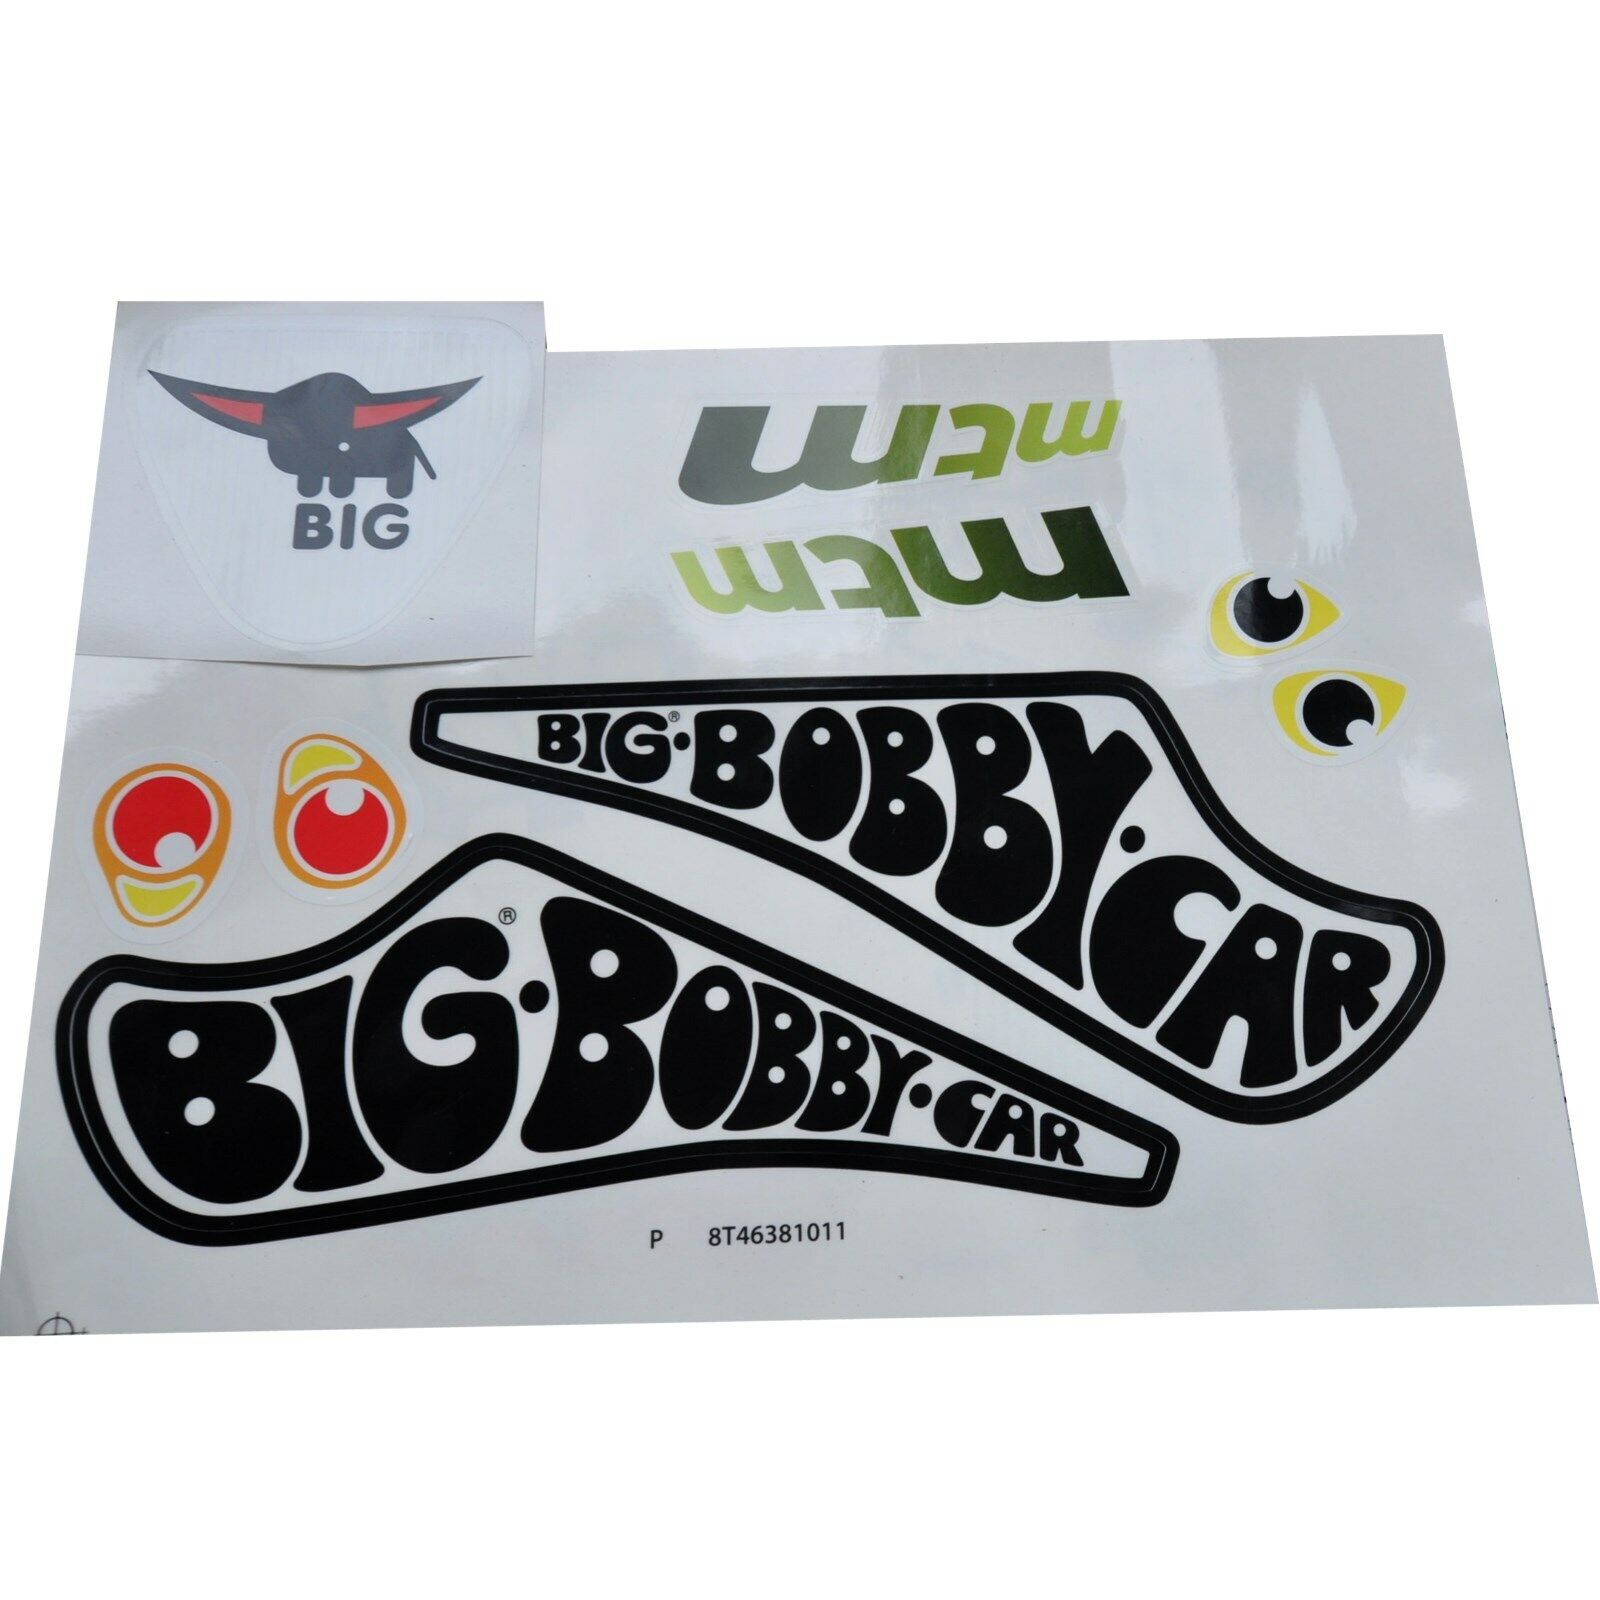 Big Bobby Car Classic Stickers Aufklebersatz Feuerwehr Fire Rescue